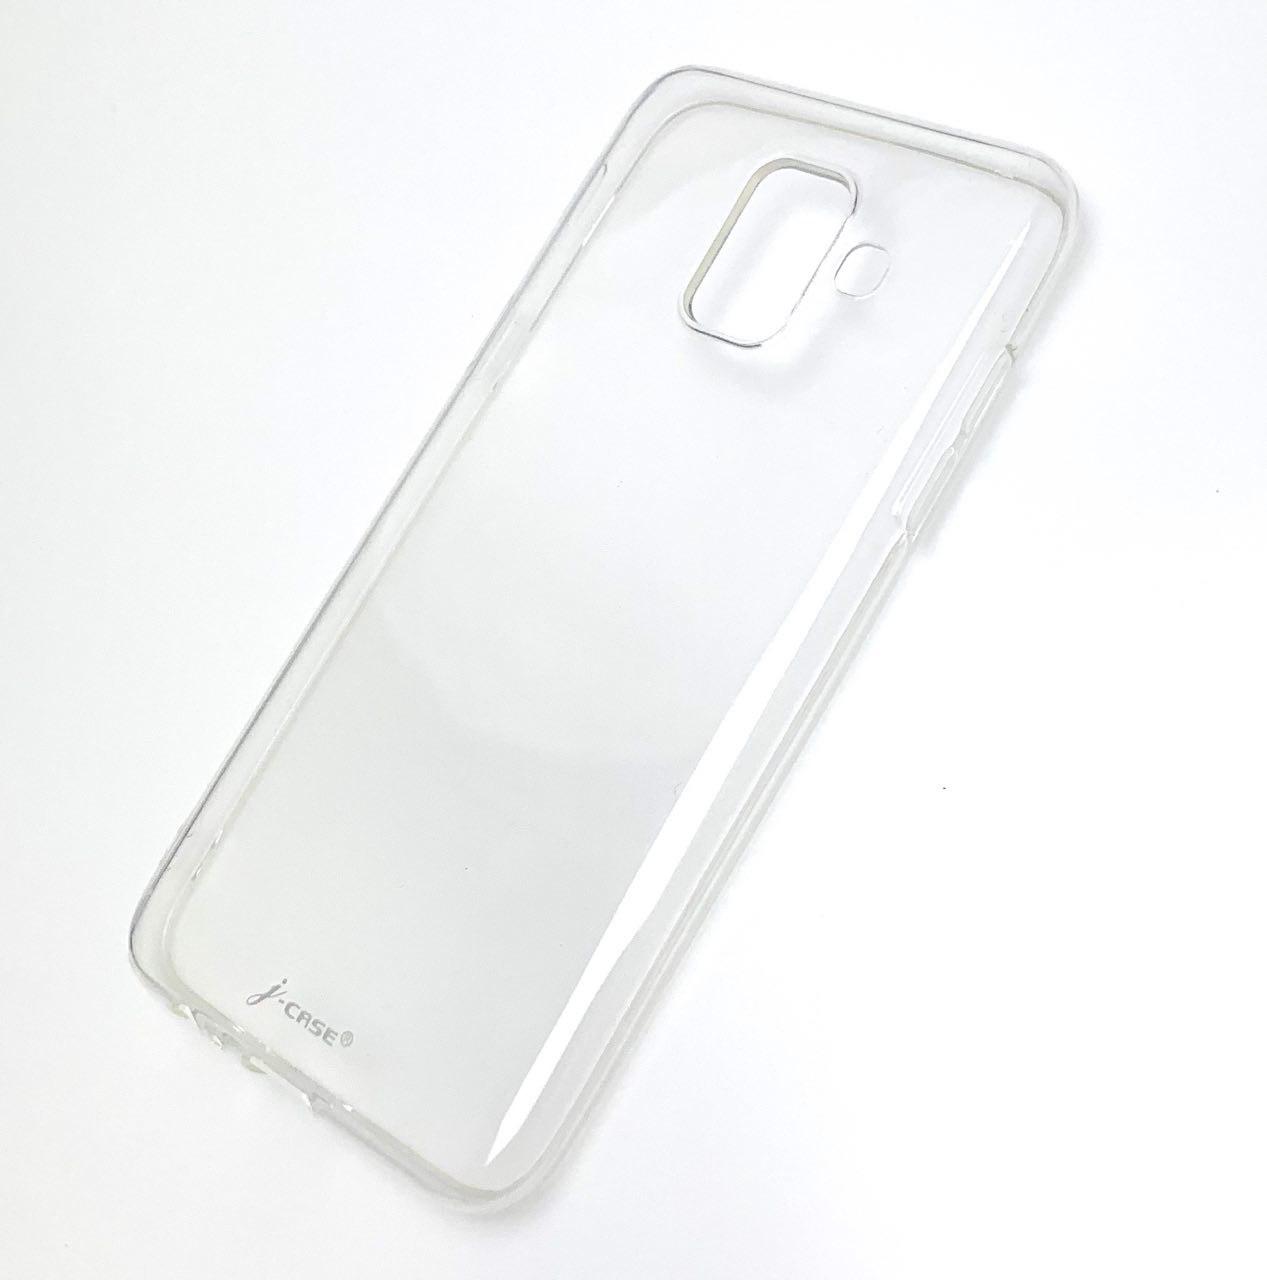 Чехол-накладка J-Case для SAMSUNG Galaxy A6 2018 (SM-A600) силикон-0,5 mm прозрачный.